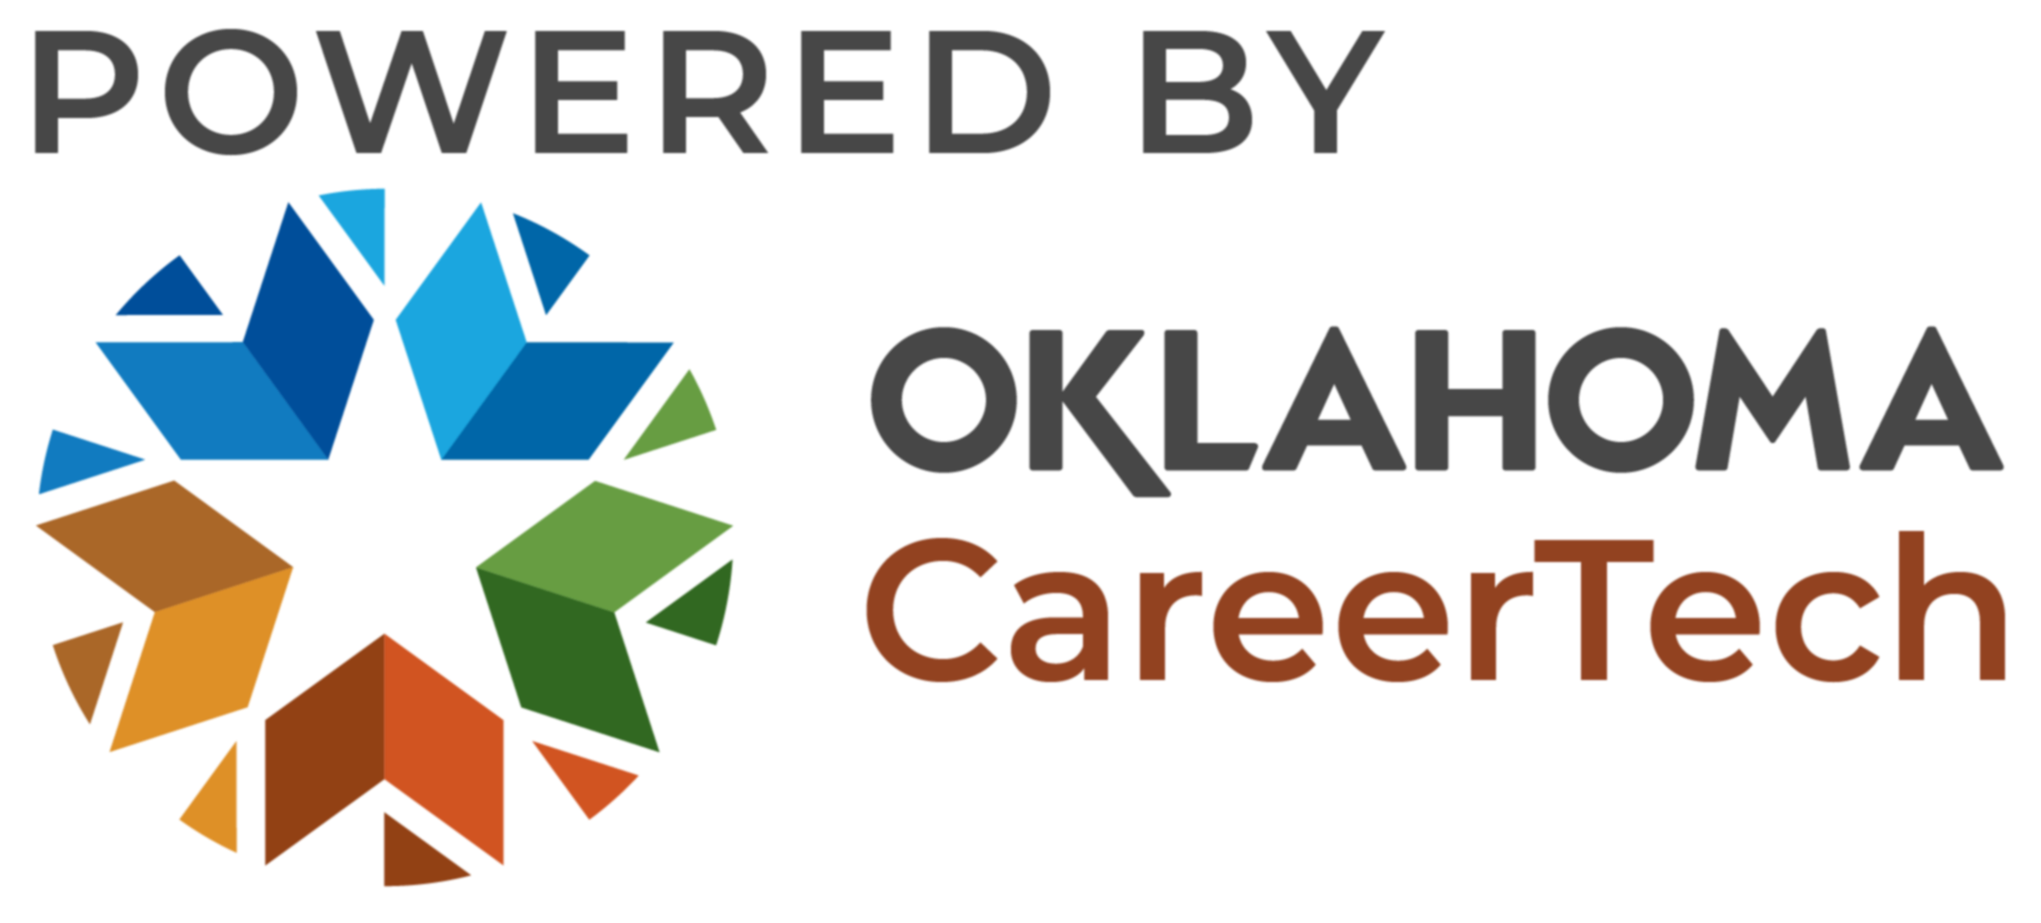 Powered by Oklahoma CareerTech